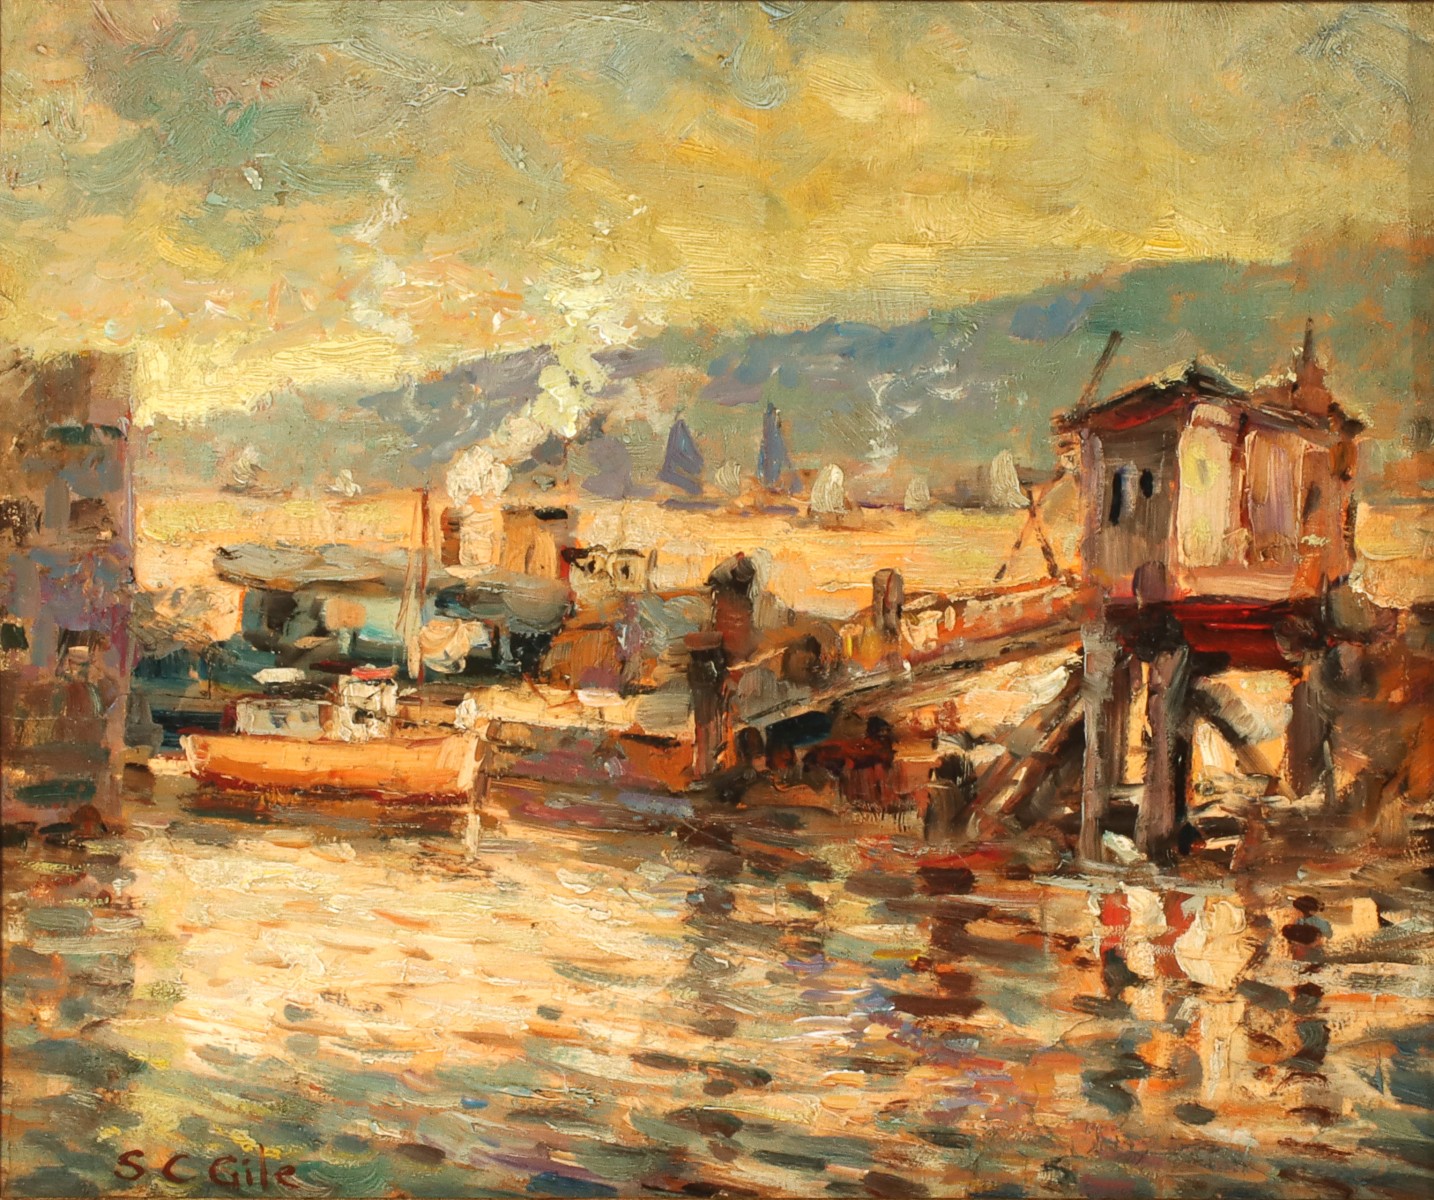 SELDON CONNOR GILE (1877-1947) OIL ON PANEL